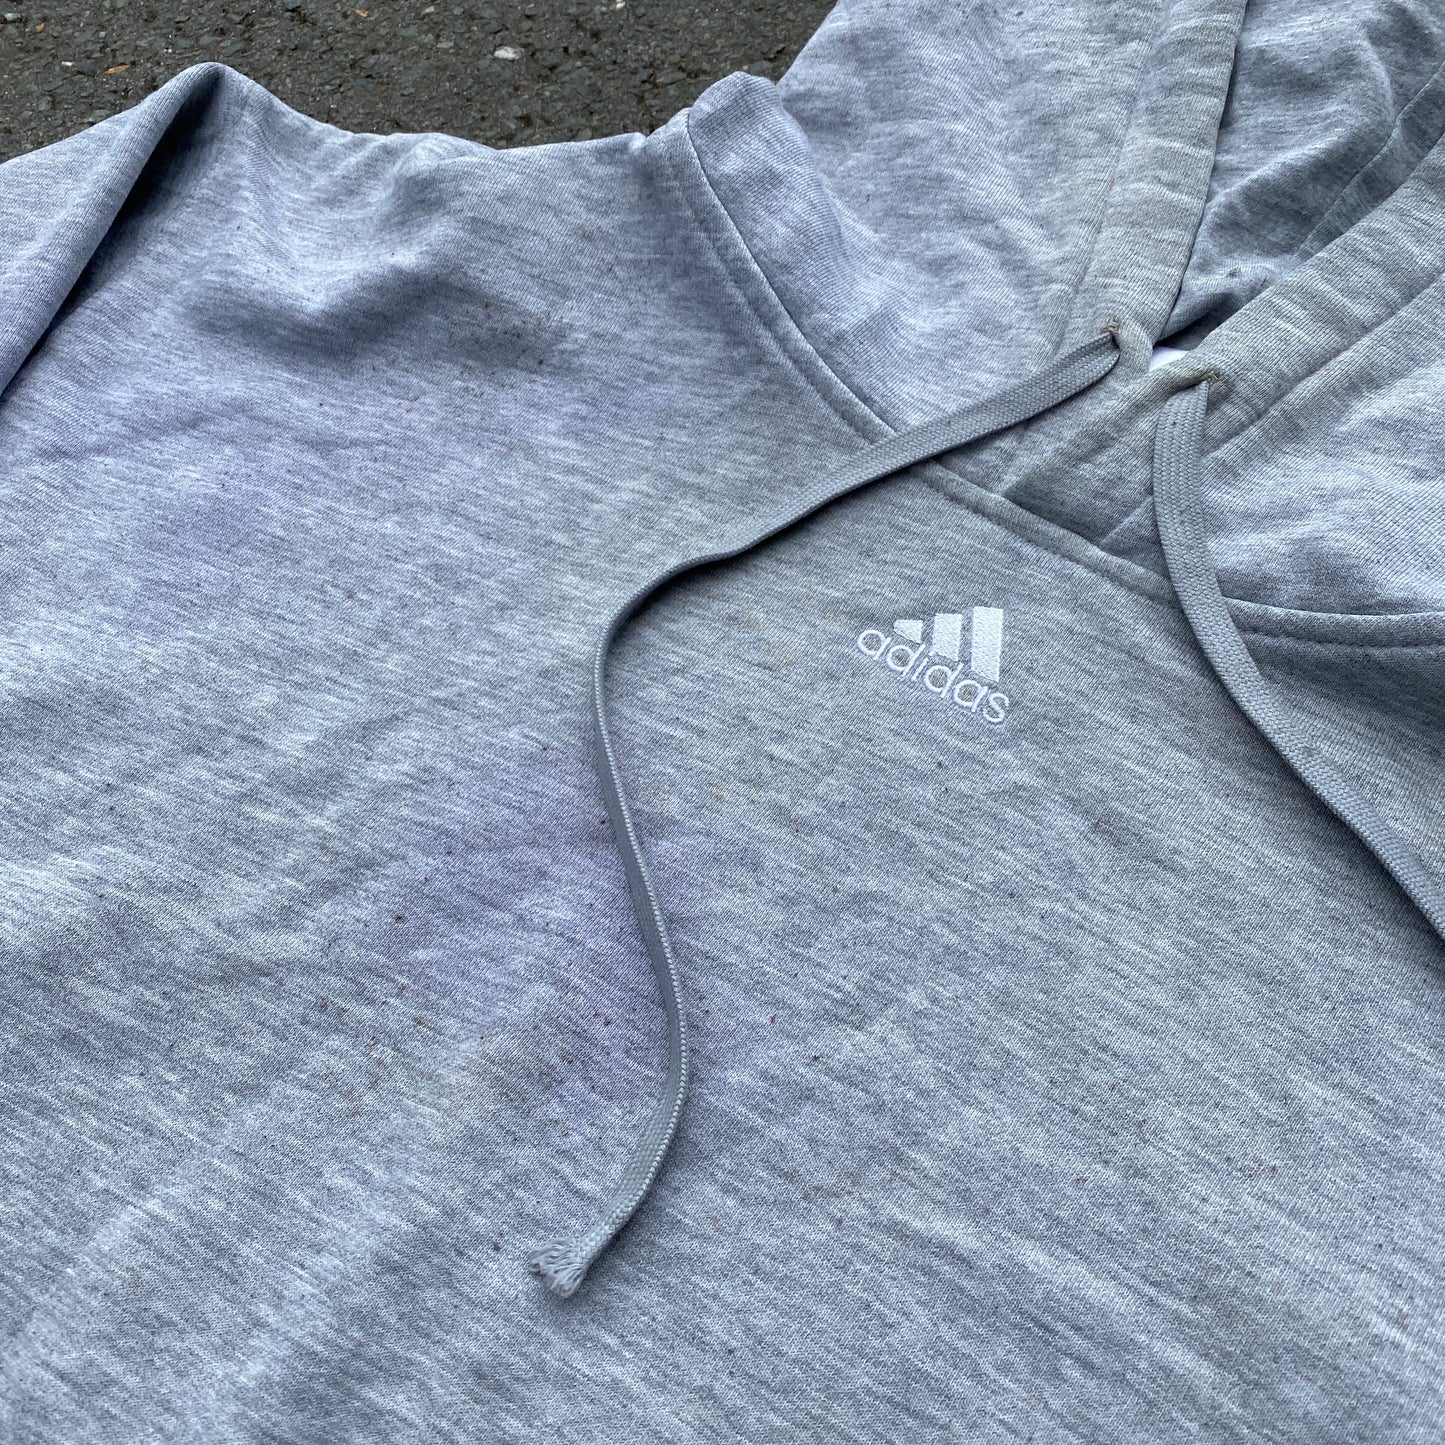 Adidas embroidered center logo hoodie (XL)